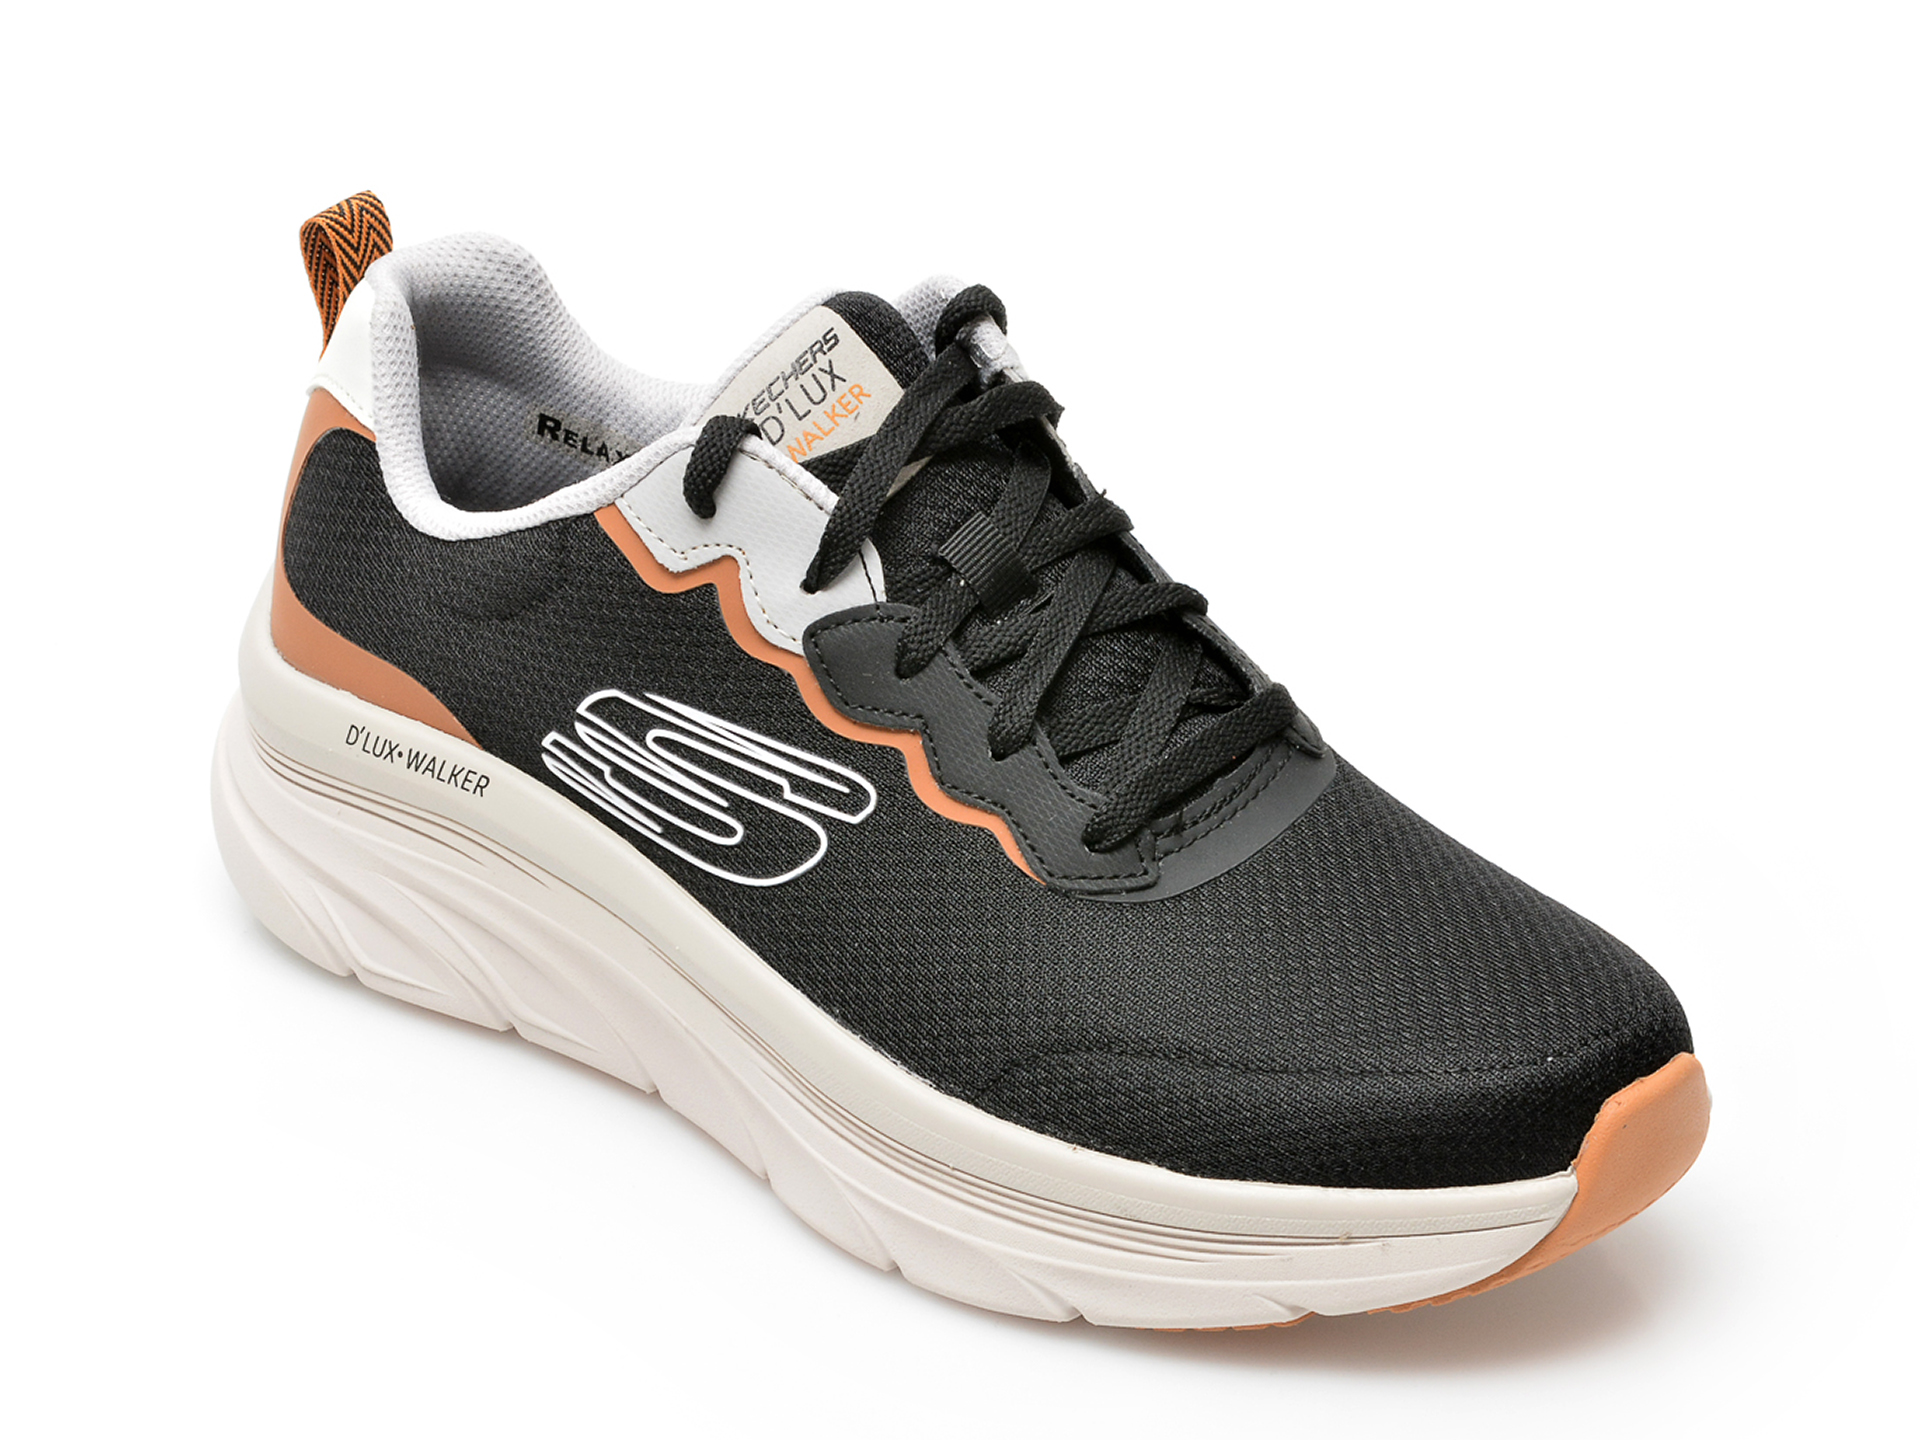 Pantofi sport SKECHERS negri, D LUX WALKER, din material textil Skechers